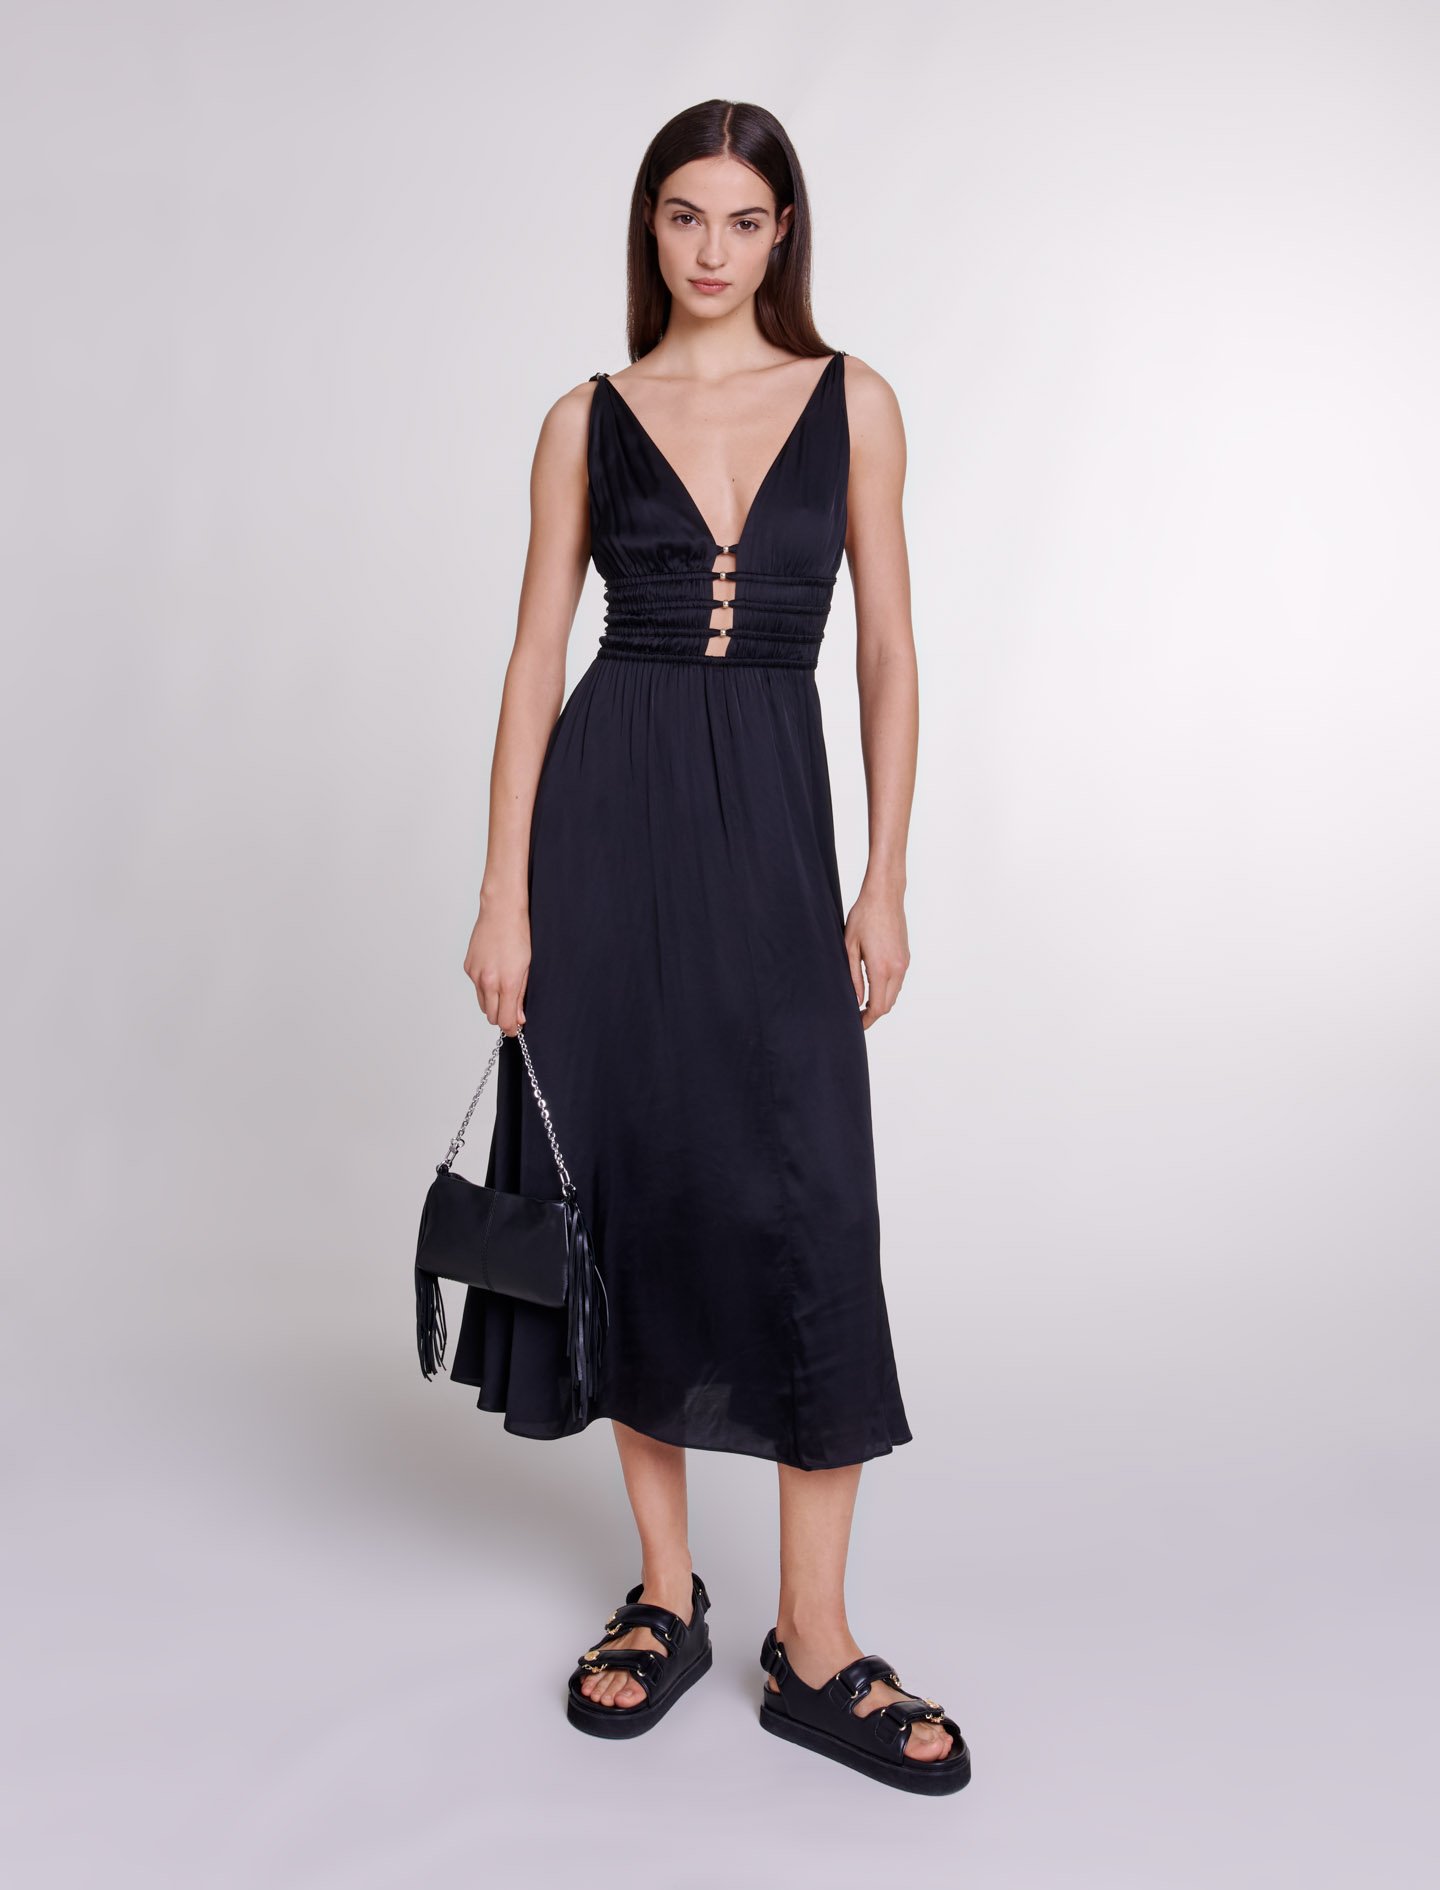 Maje Woman's viscose Openwork satin-effect dress for Spring/Summer, in color Black / Black